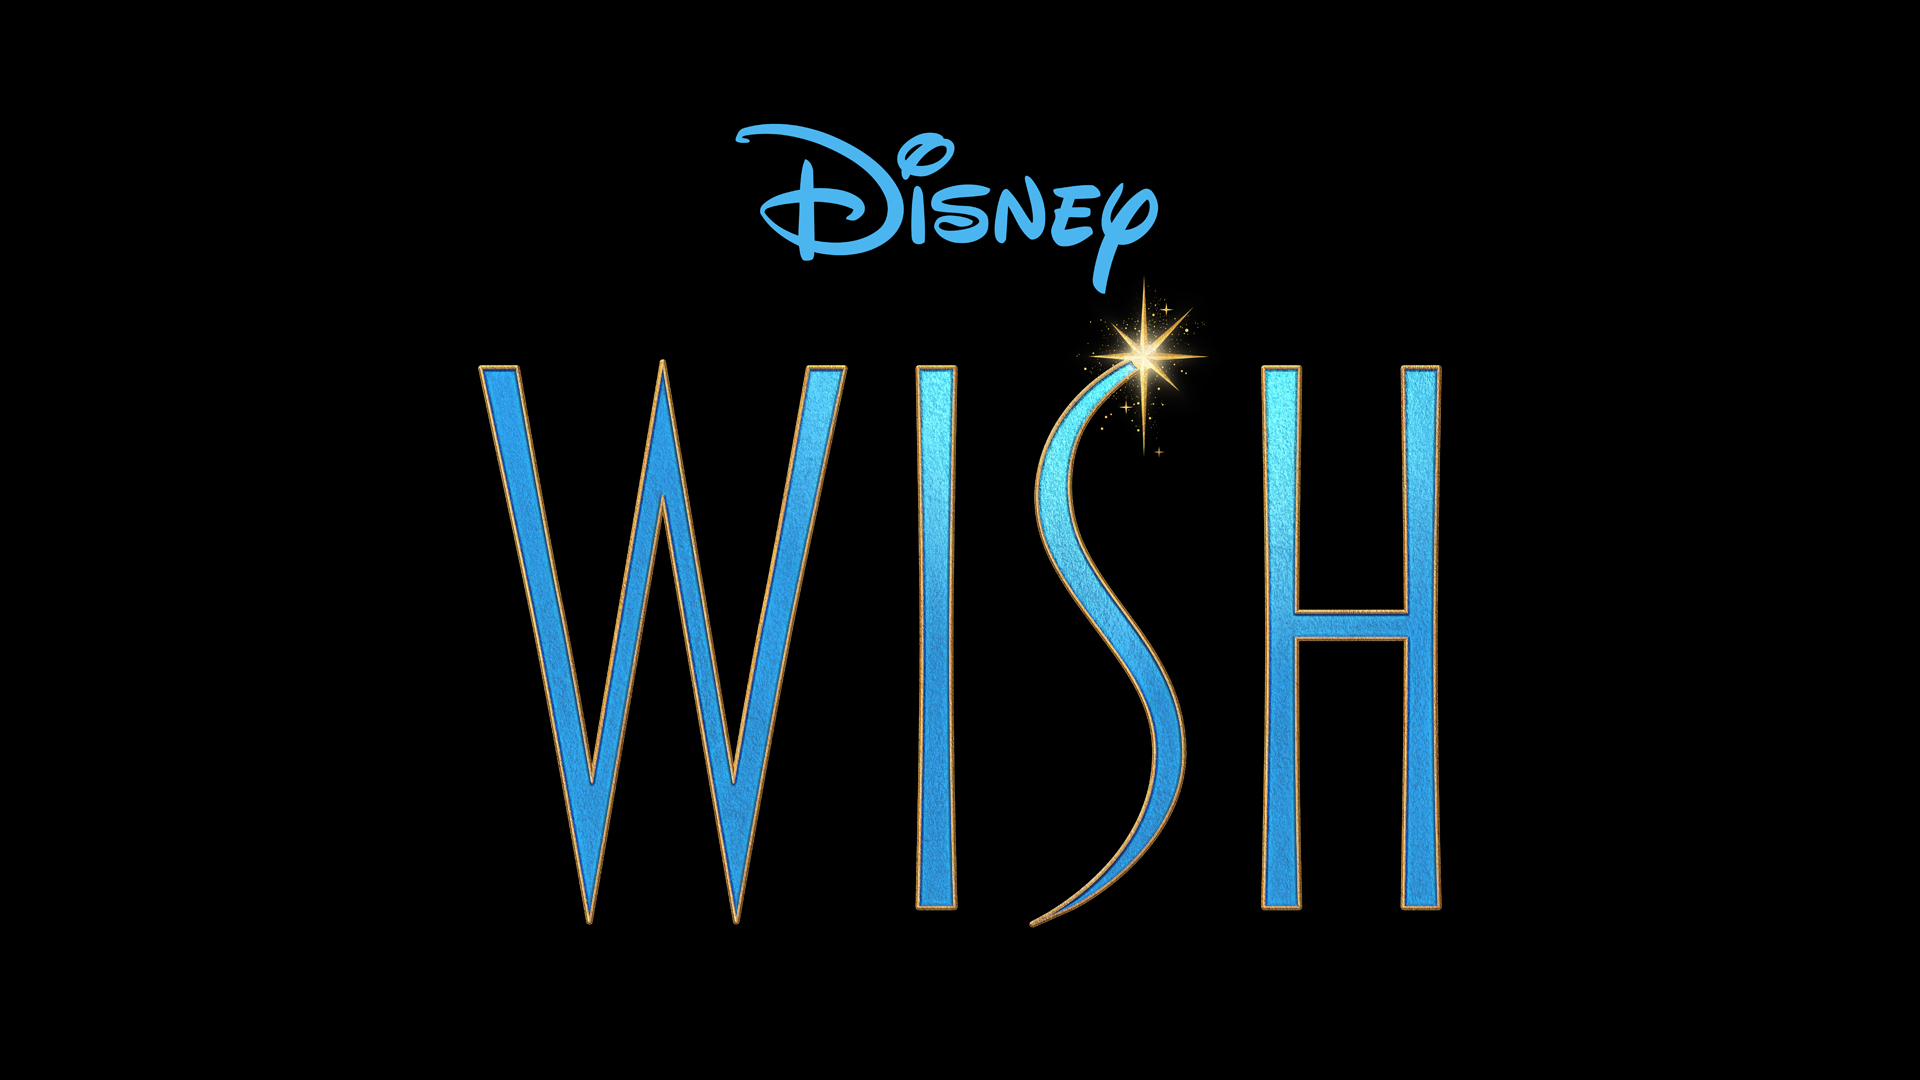 PHOTOS First Look at Disney's Film 'Wish'